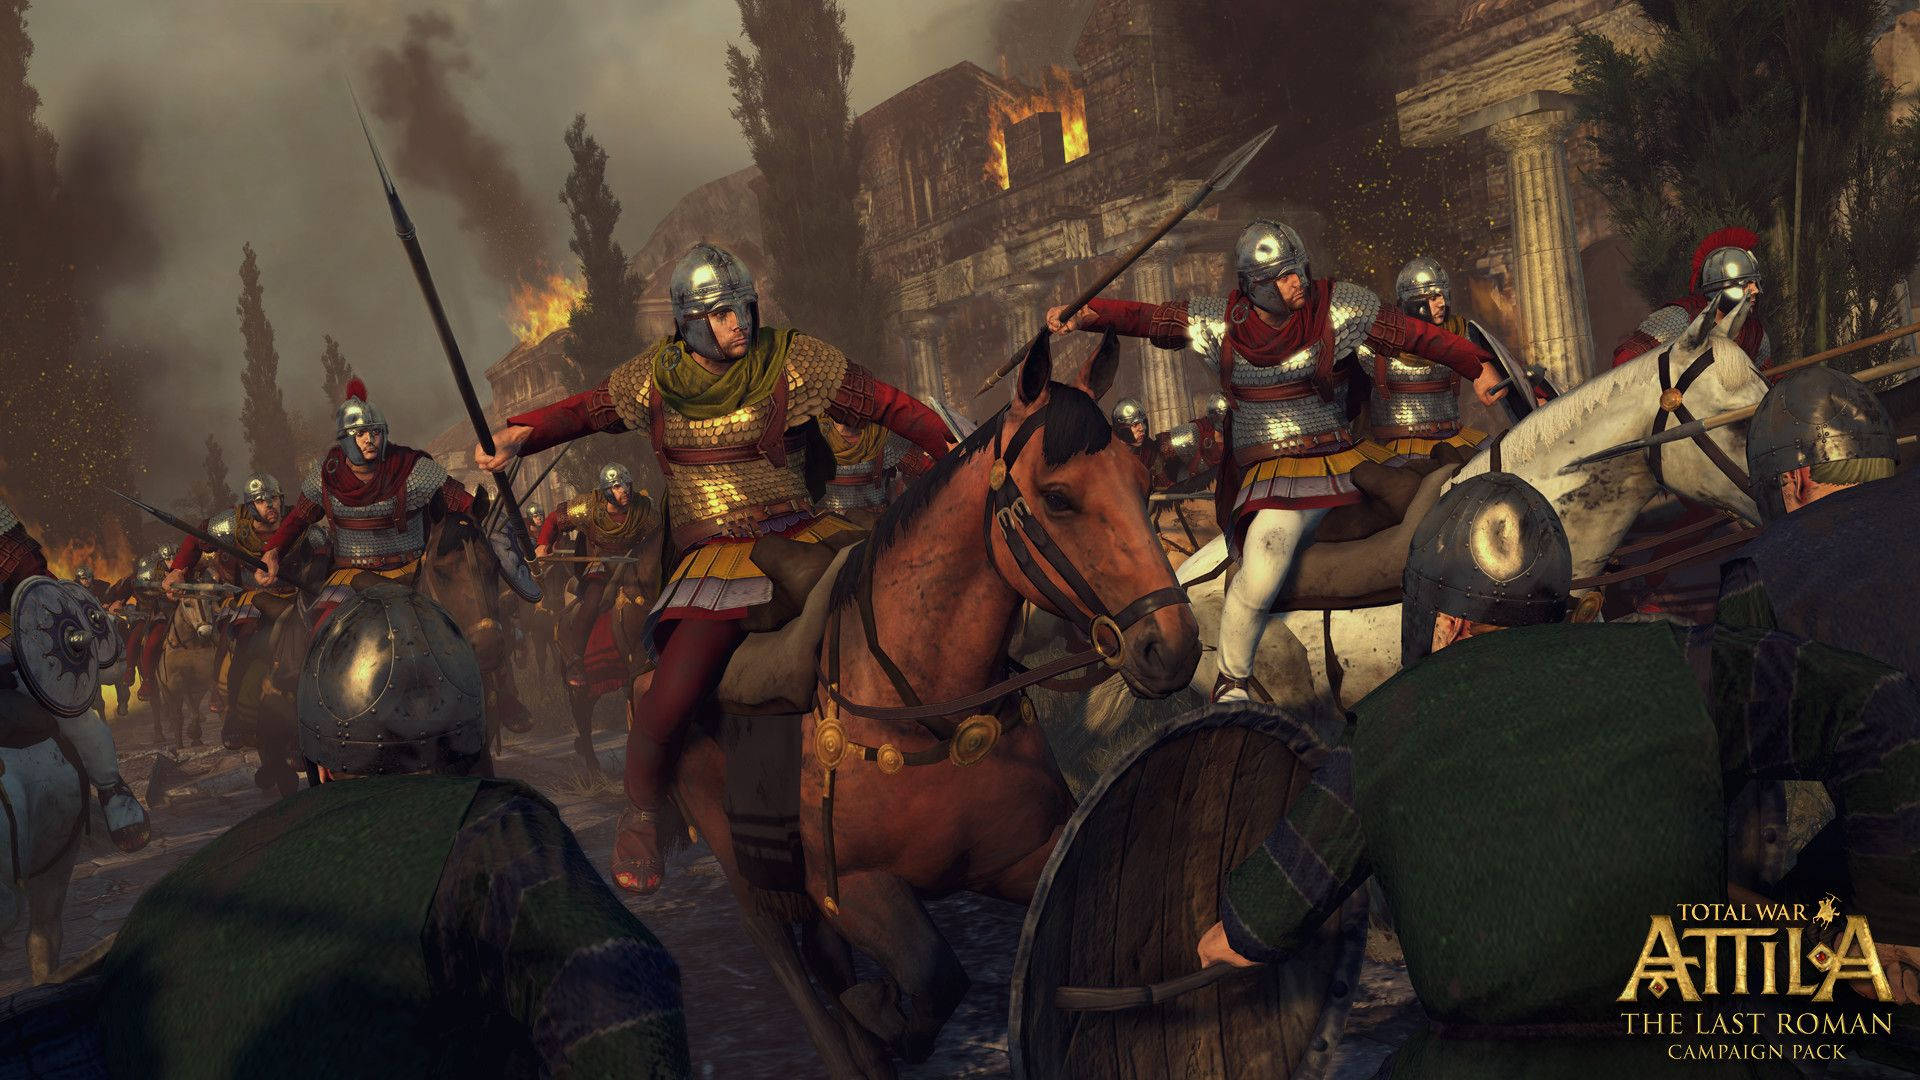 Epic Battle Scene from Total War Attila: The Last Roman Wallpaper